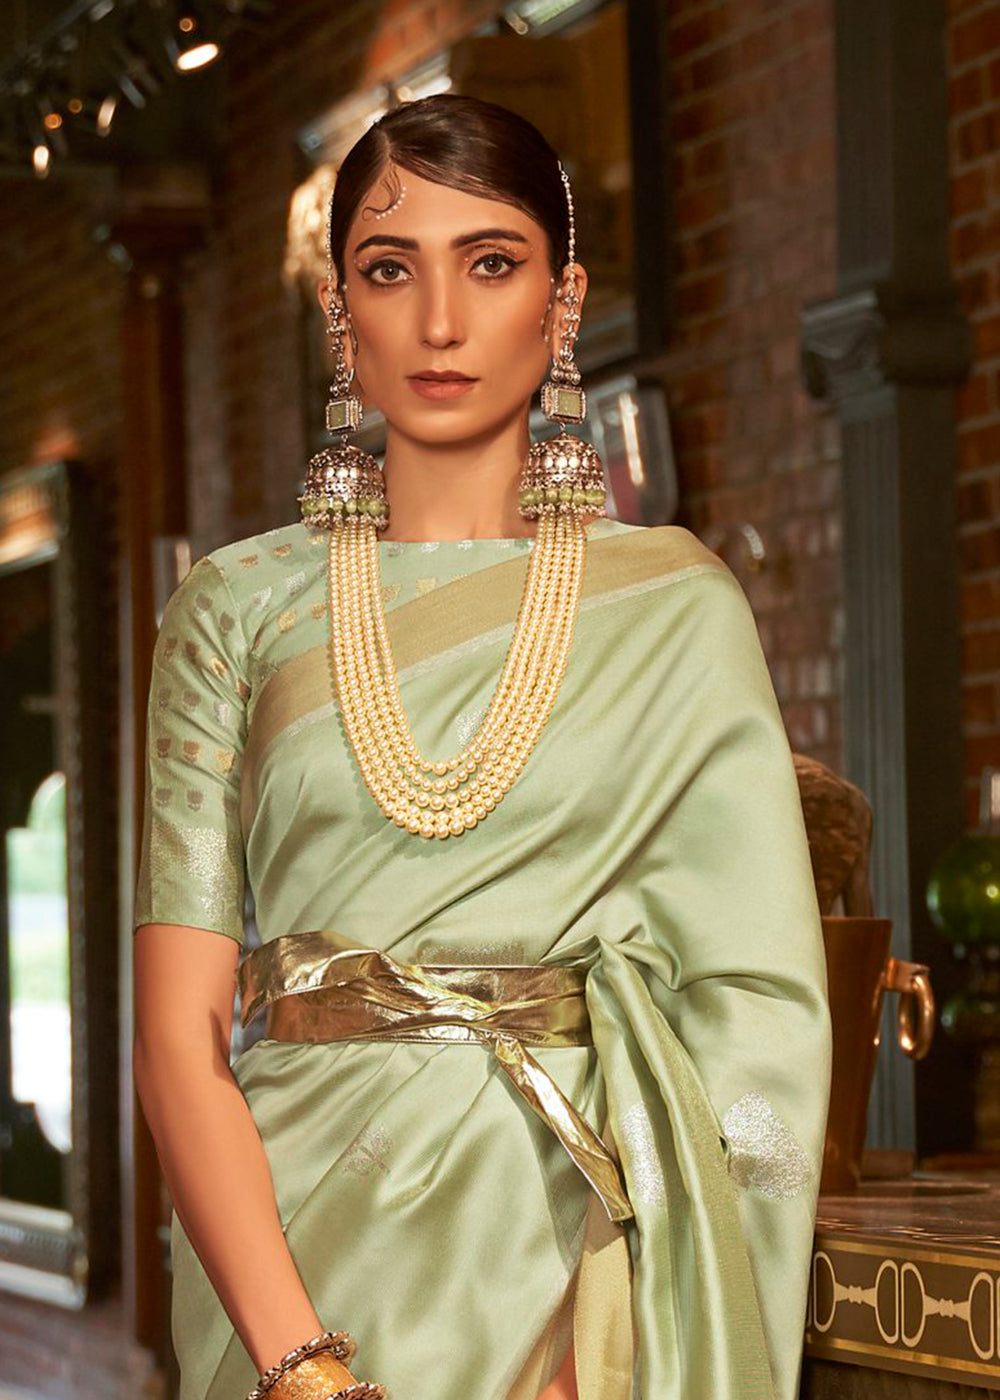 Buy Now Pista Green Handloom Silk Weaving Contemporary Saree Online in USA, UK, Canada & Worldwide at Empress Clothing.